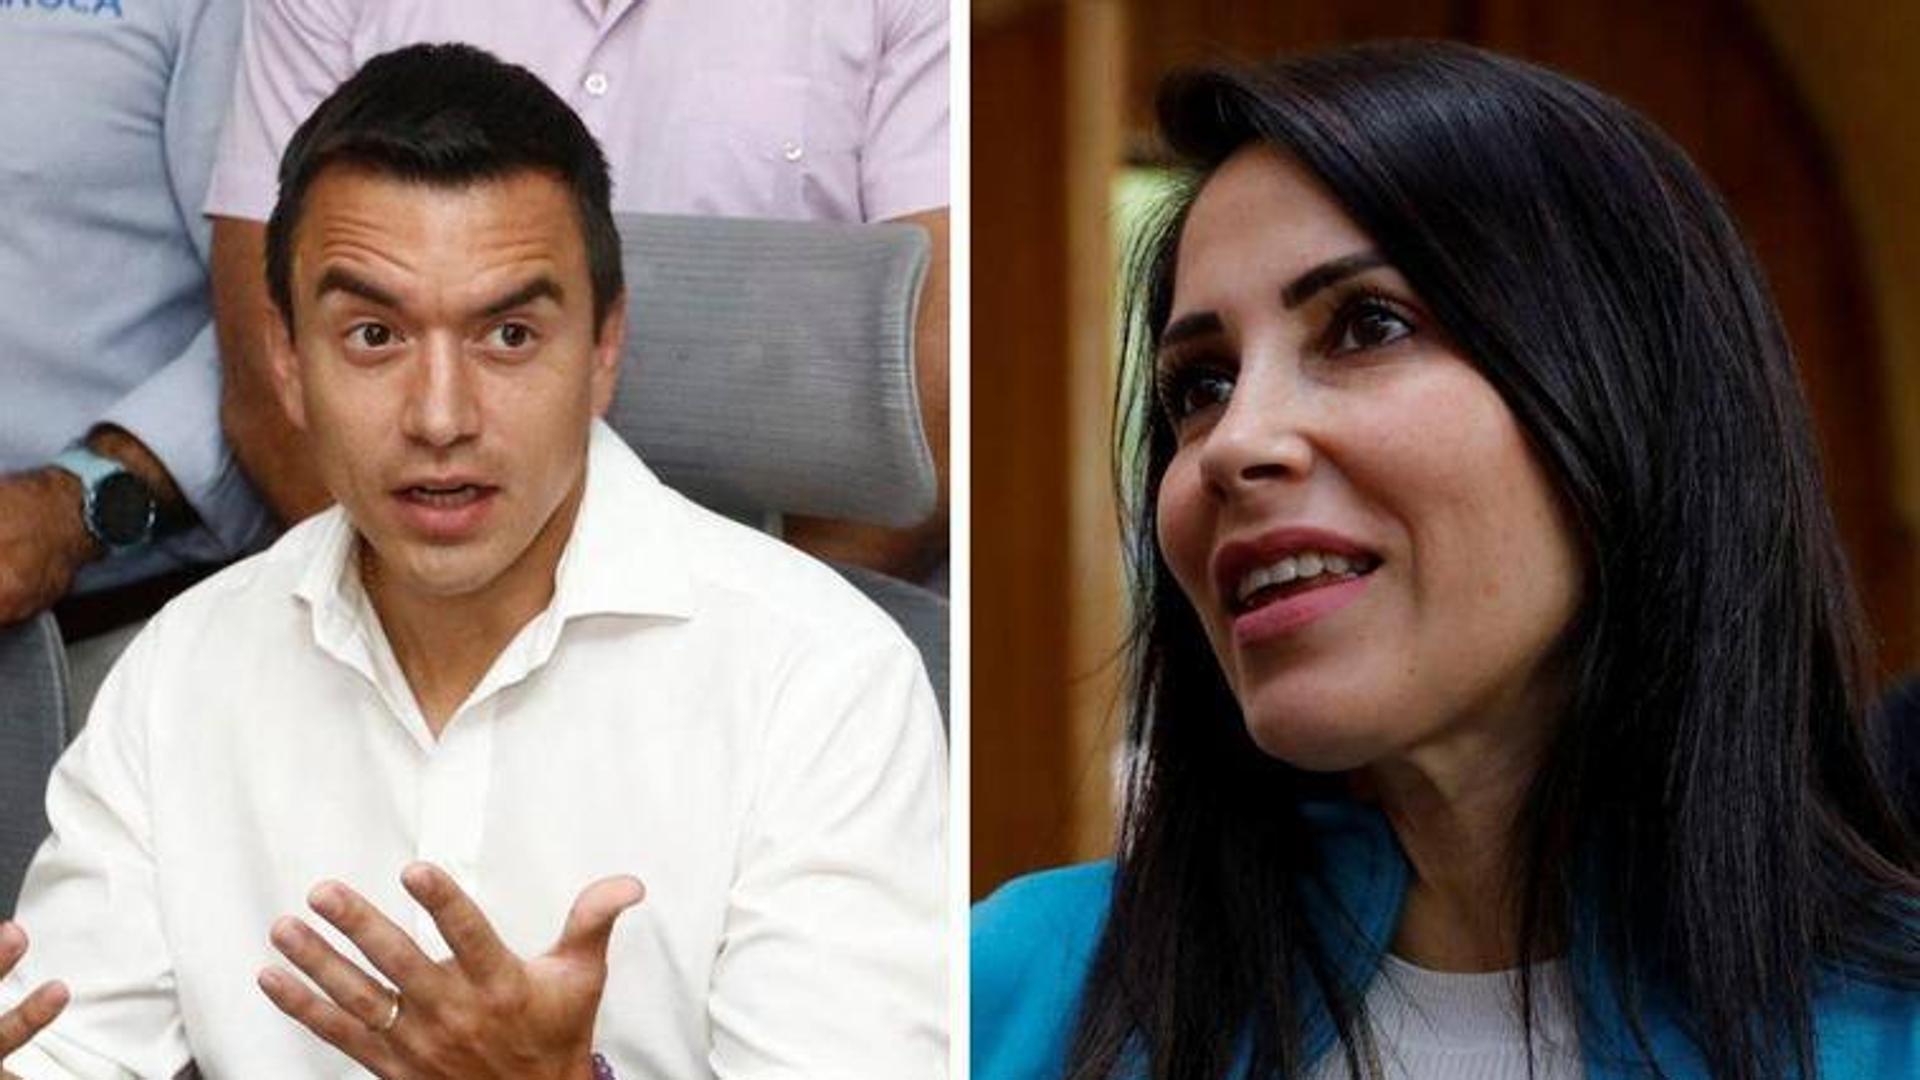 Correísta Luisa González and businessman Daniel Noboa will play for the presidency of Ecuador